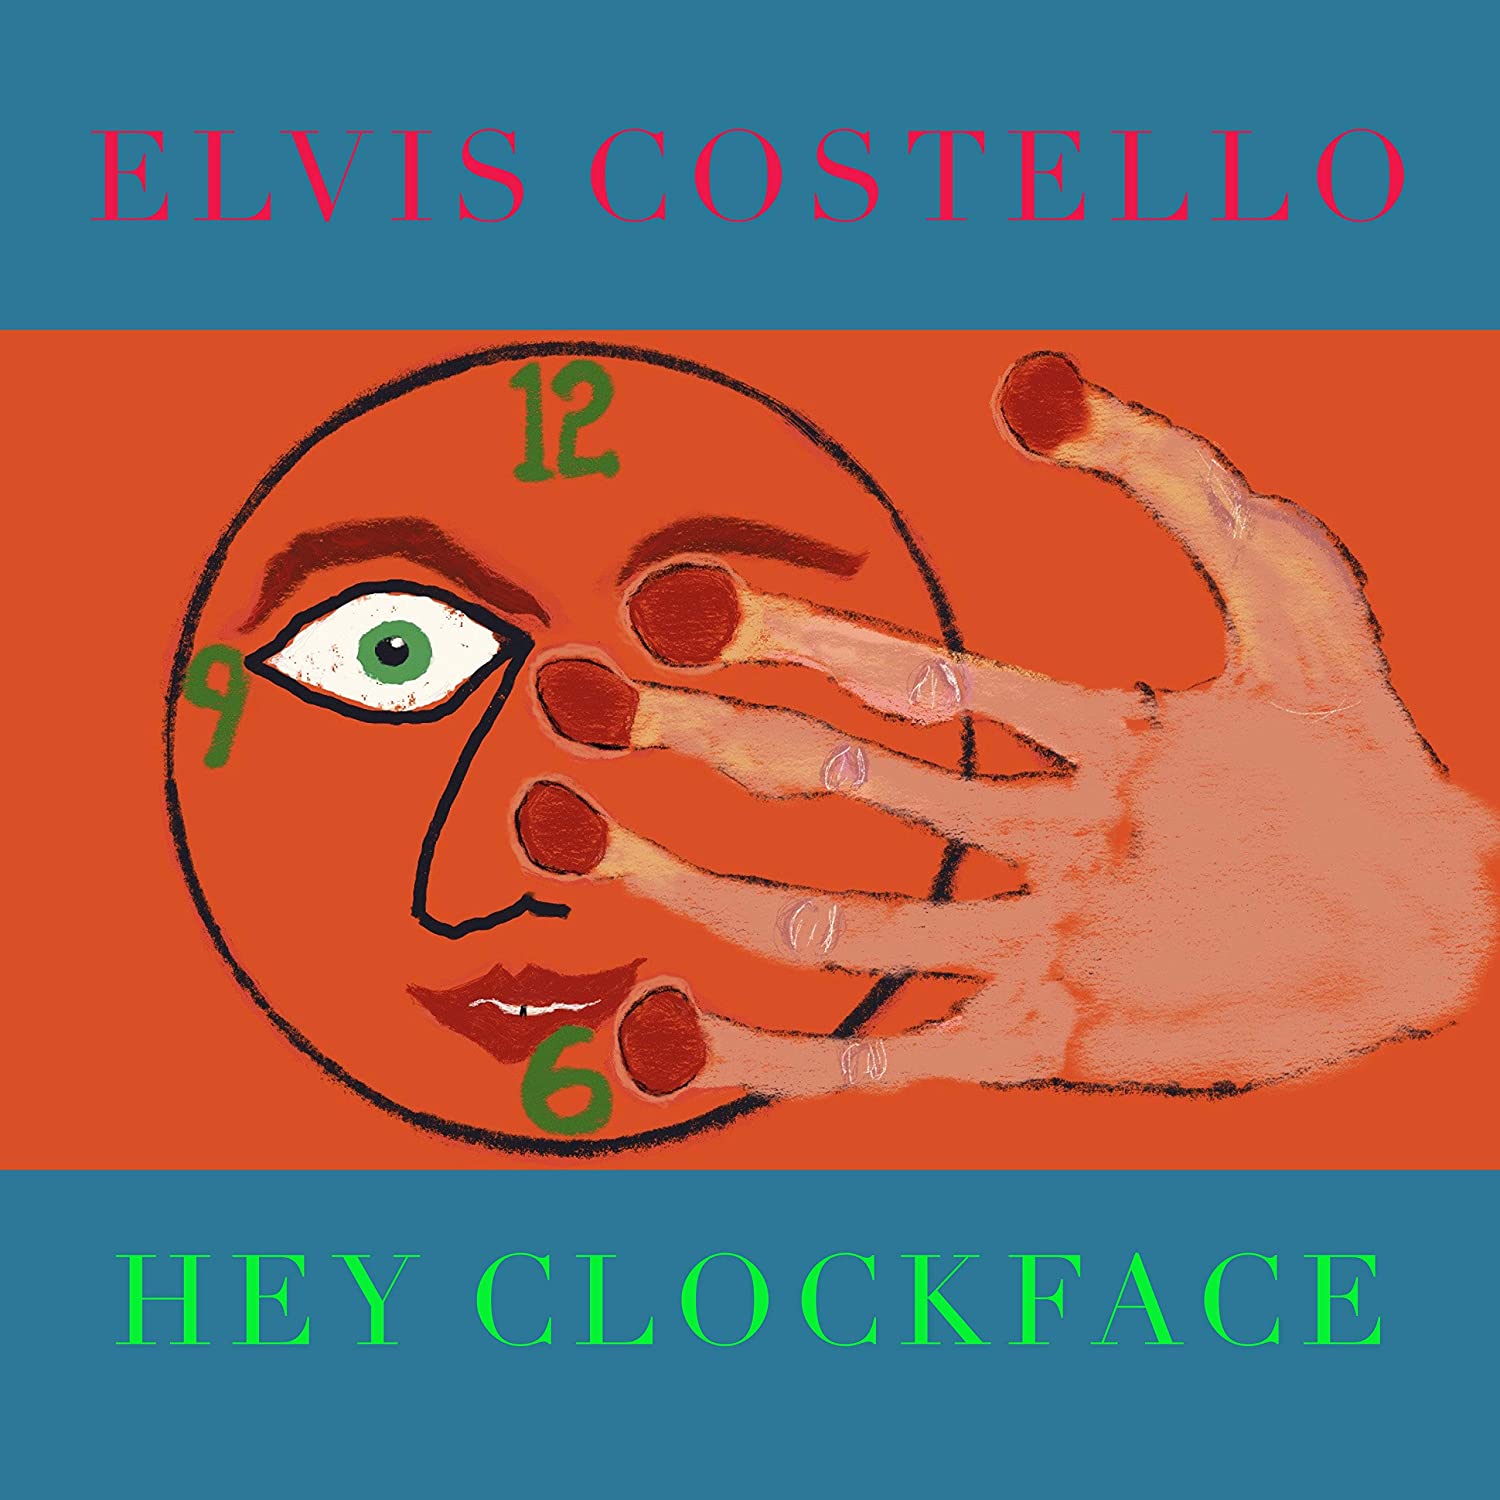 Elvis Costello / Hey Clockface